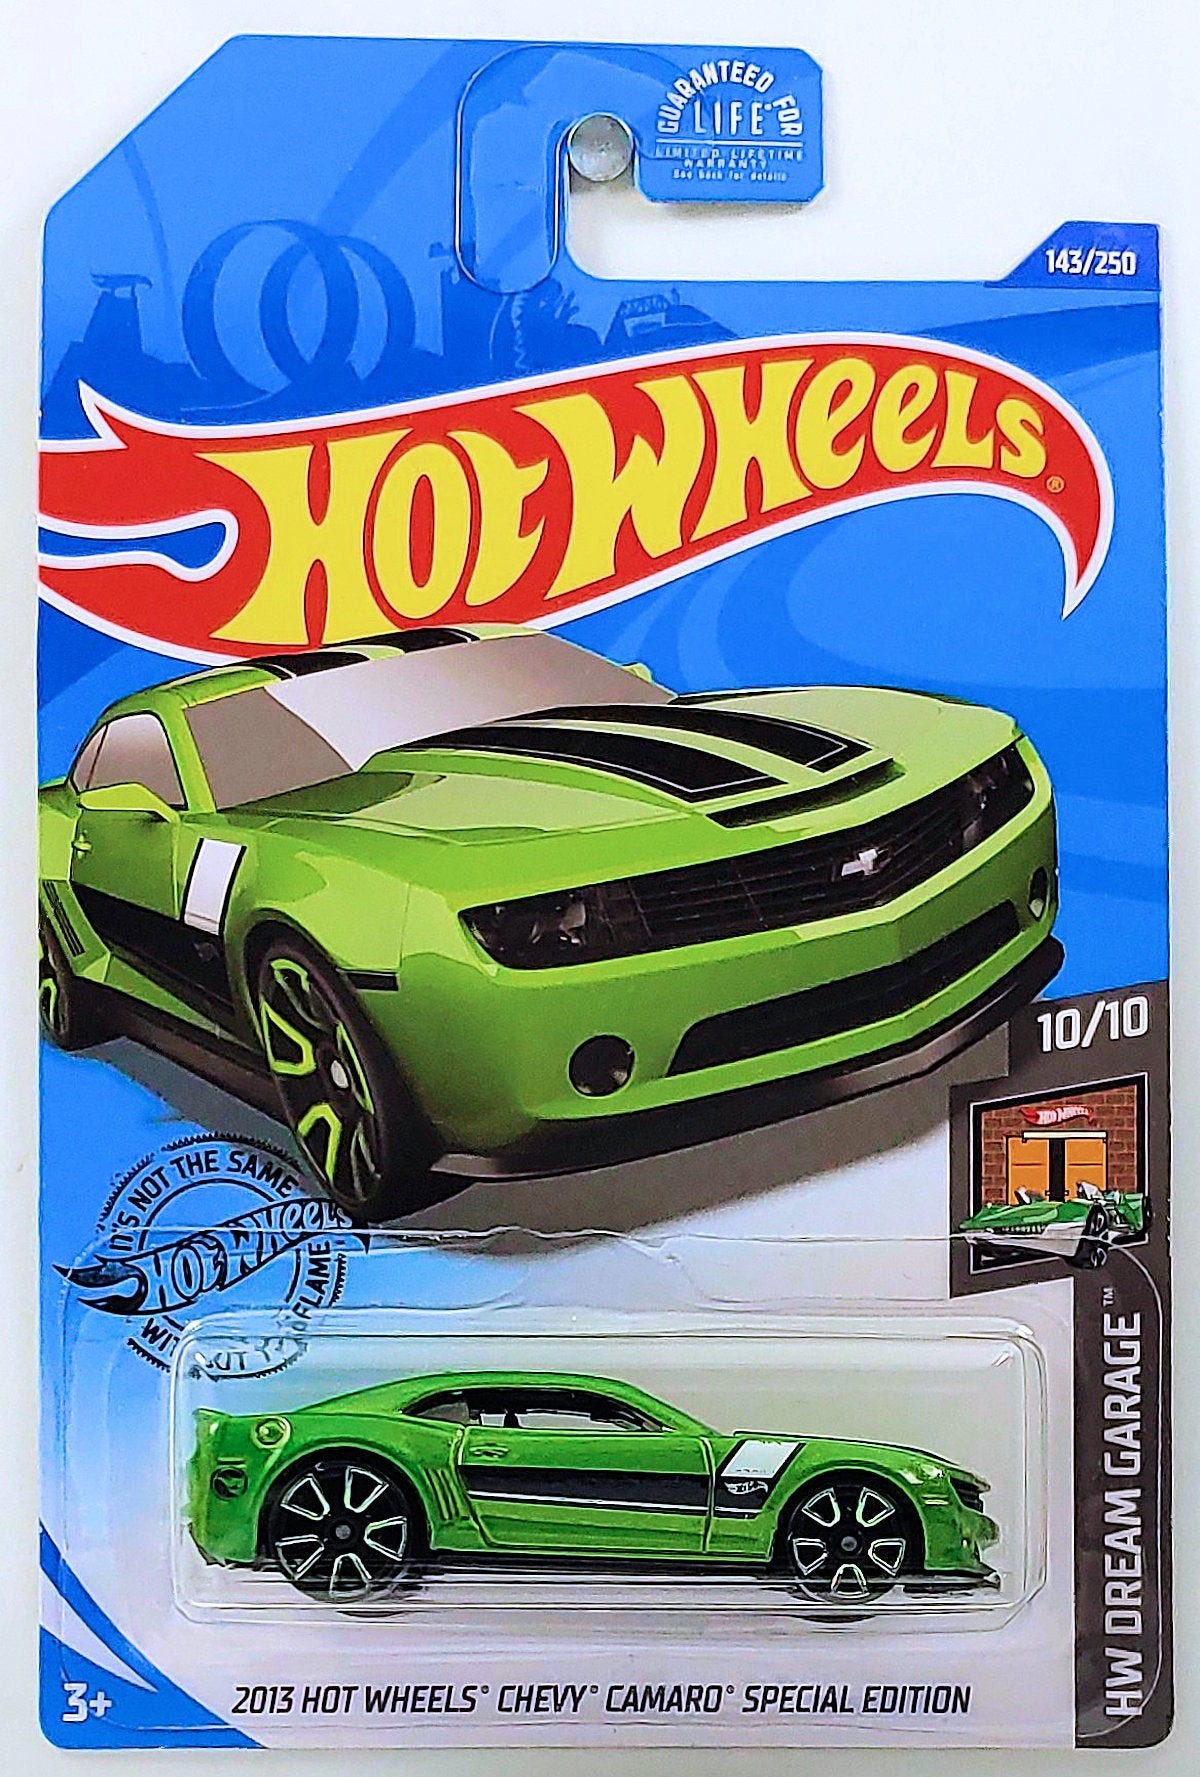 Hot Wheels 2020 - Collector # 143/250 - HW Dream Garage 10/10 - Treasure Hunts - 2013 Hot Wheels Chevy Camaro Special Edition - Metallic Lime Green